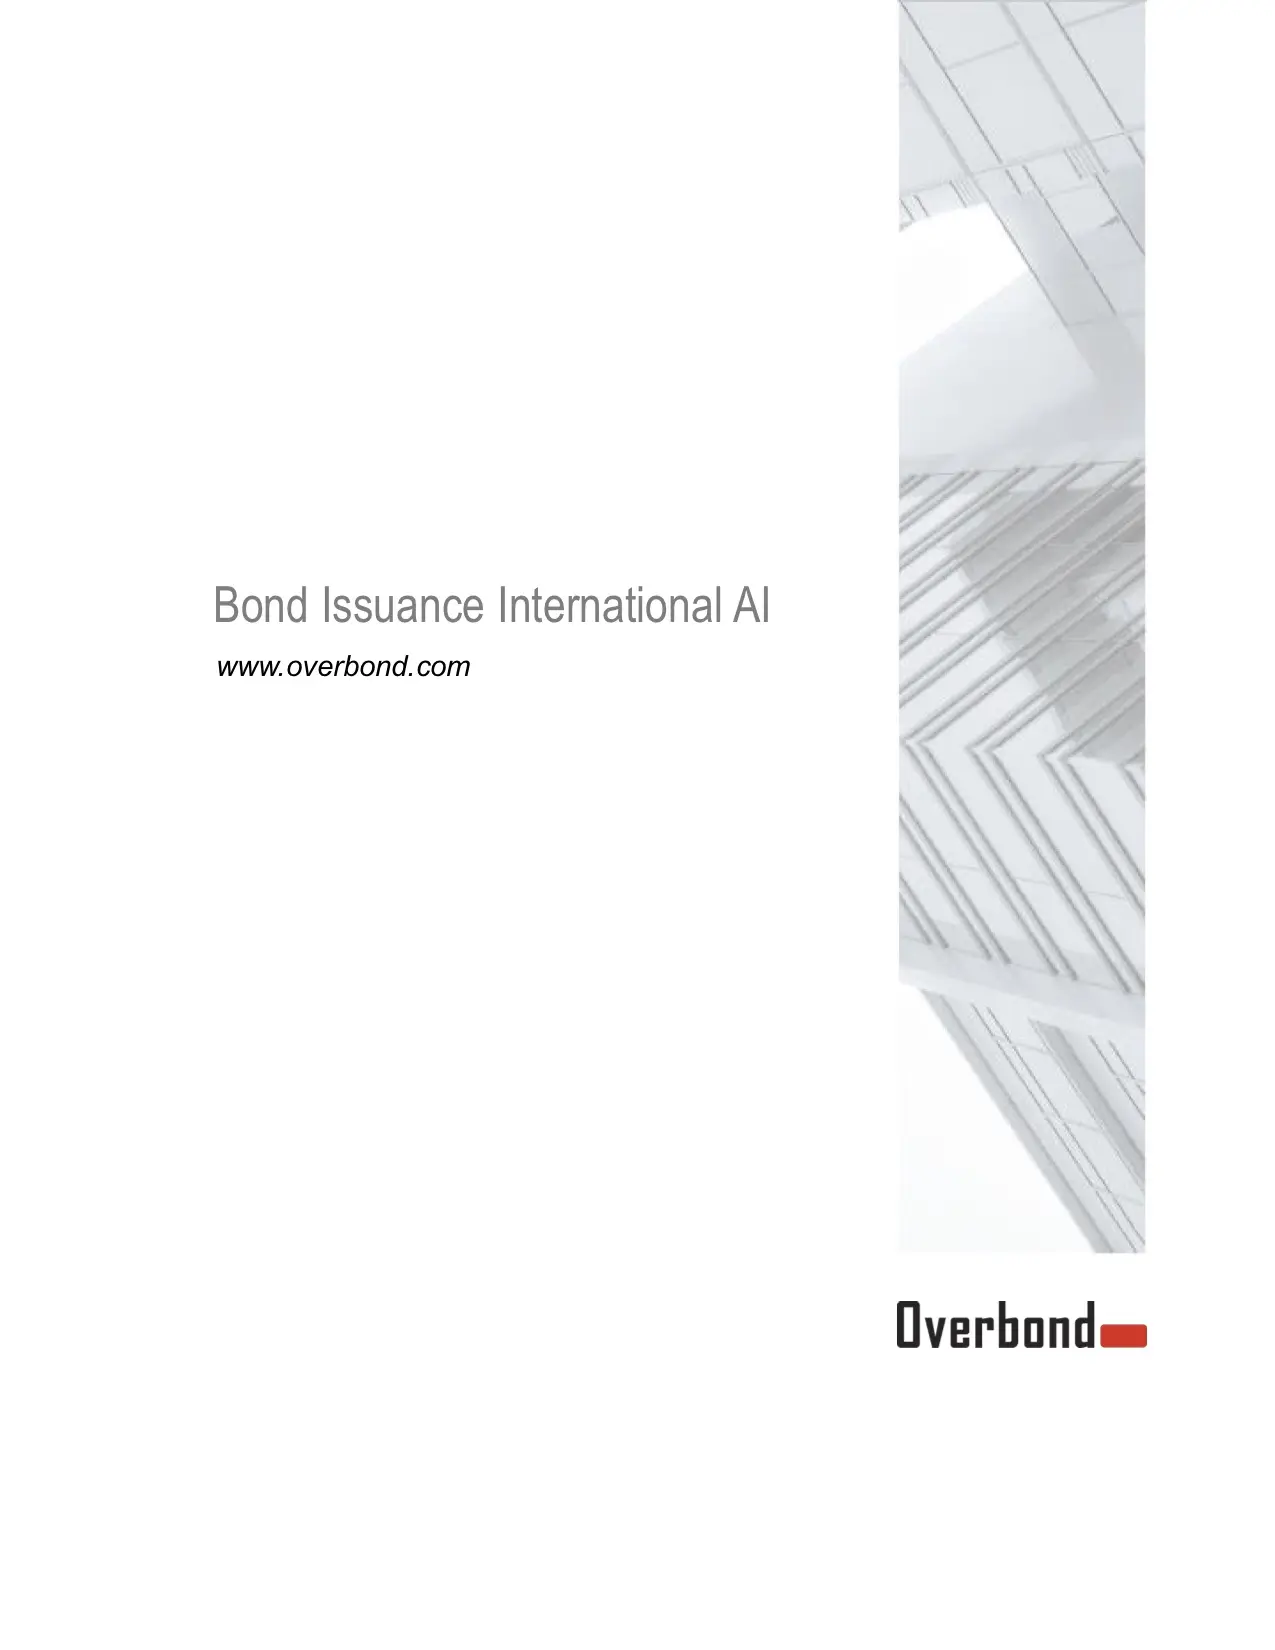 Cobi bond issuance international ai white paper cover j79voc